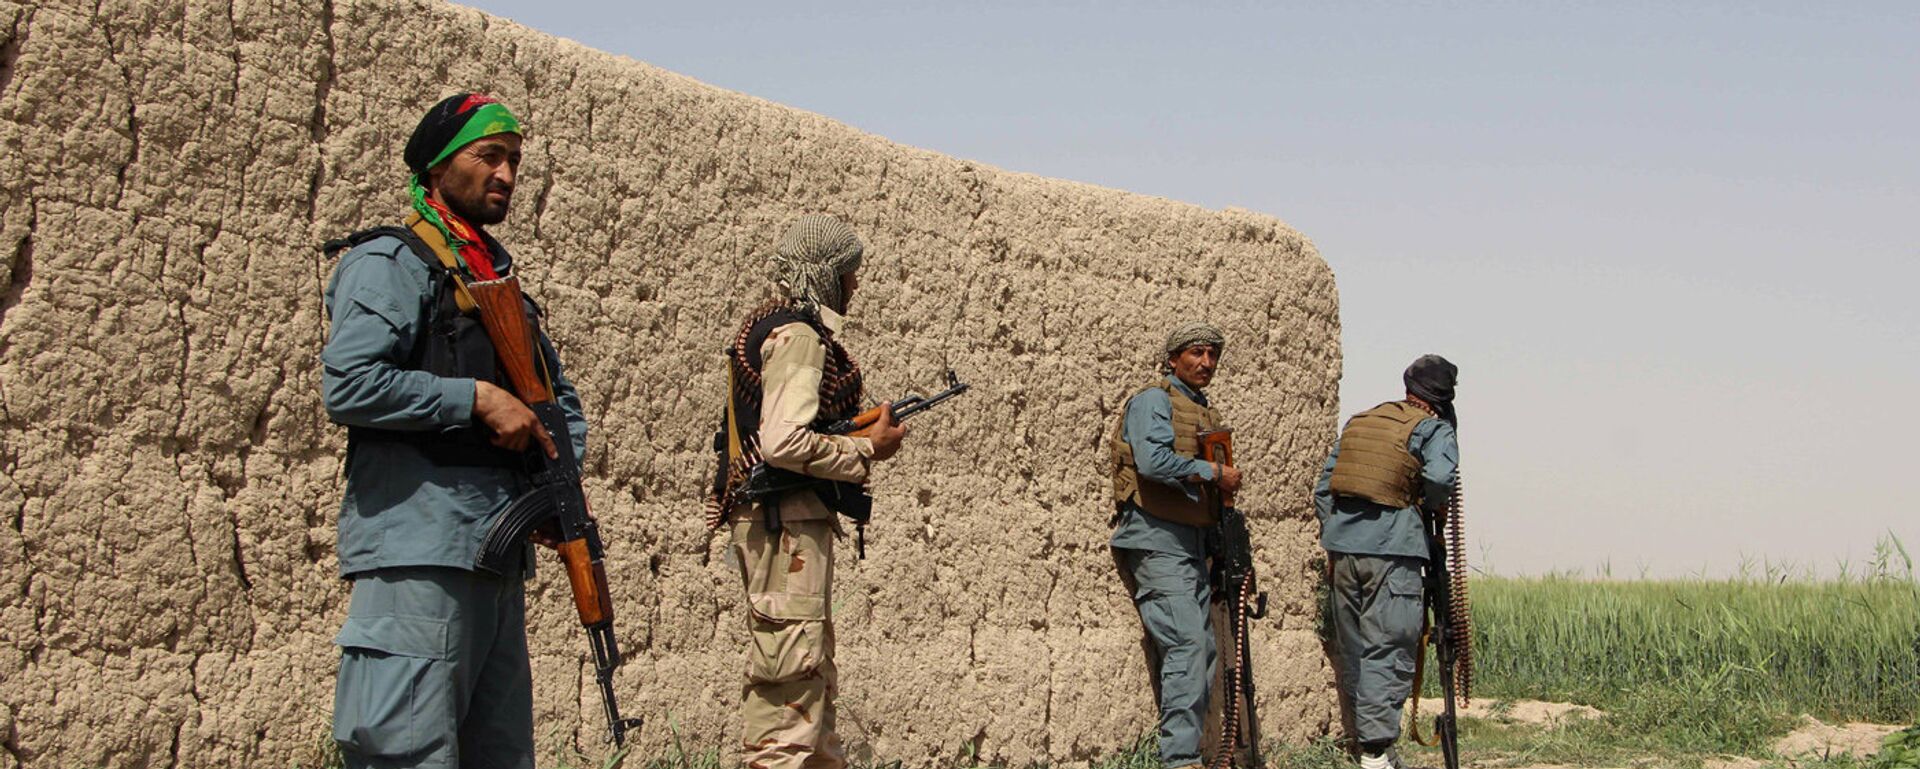 Полицейские Афганистана во время боя с талибами в Нахри-Сарадж провинции Гильменд, Афганистан - Sputnik Latvija, 1920, 01.08.2021